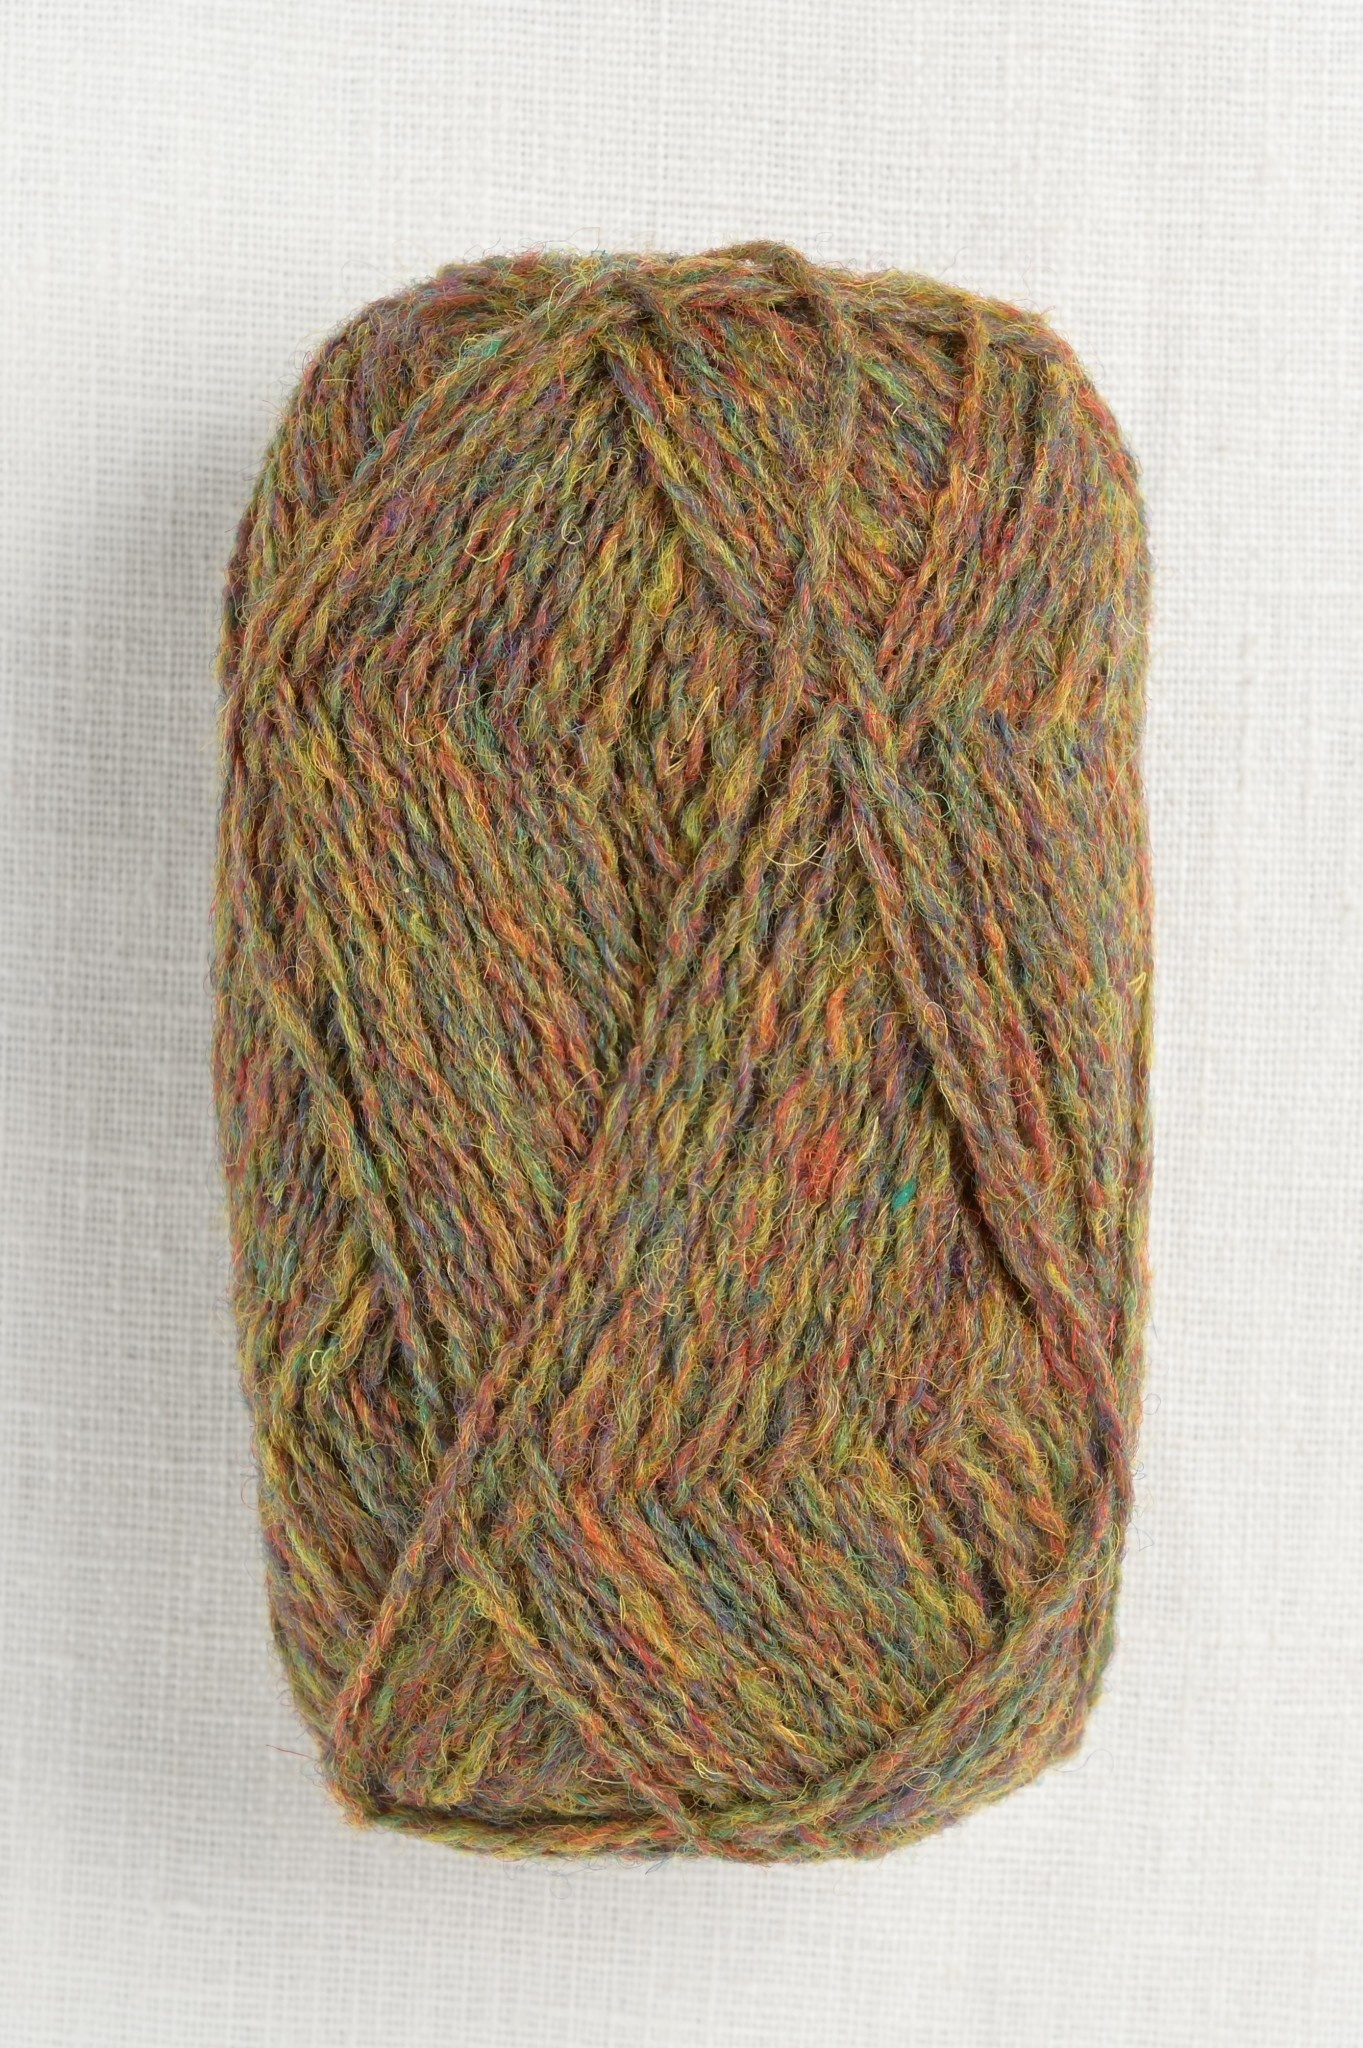 Shetland Spindrift - Wool and Company Yarn